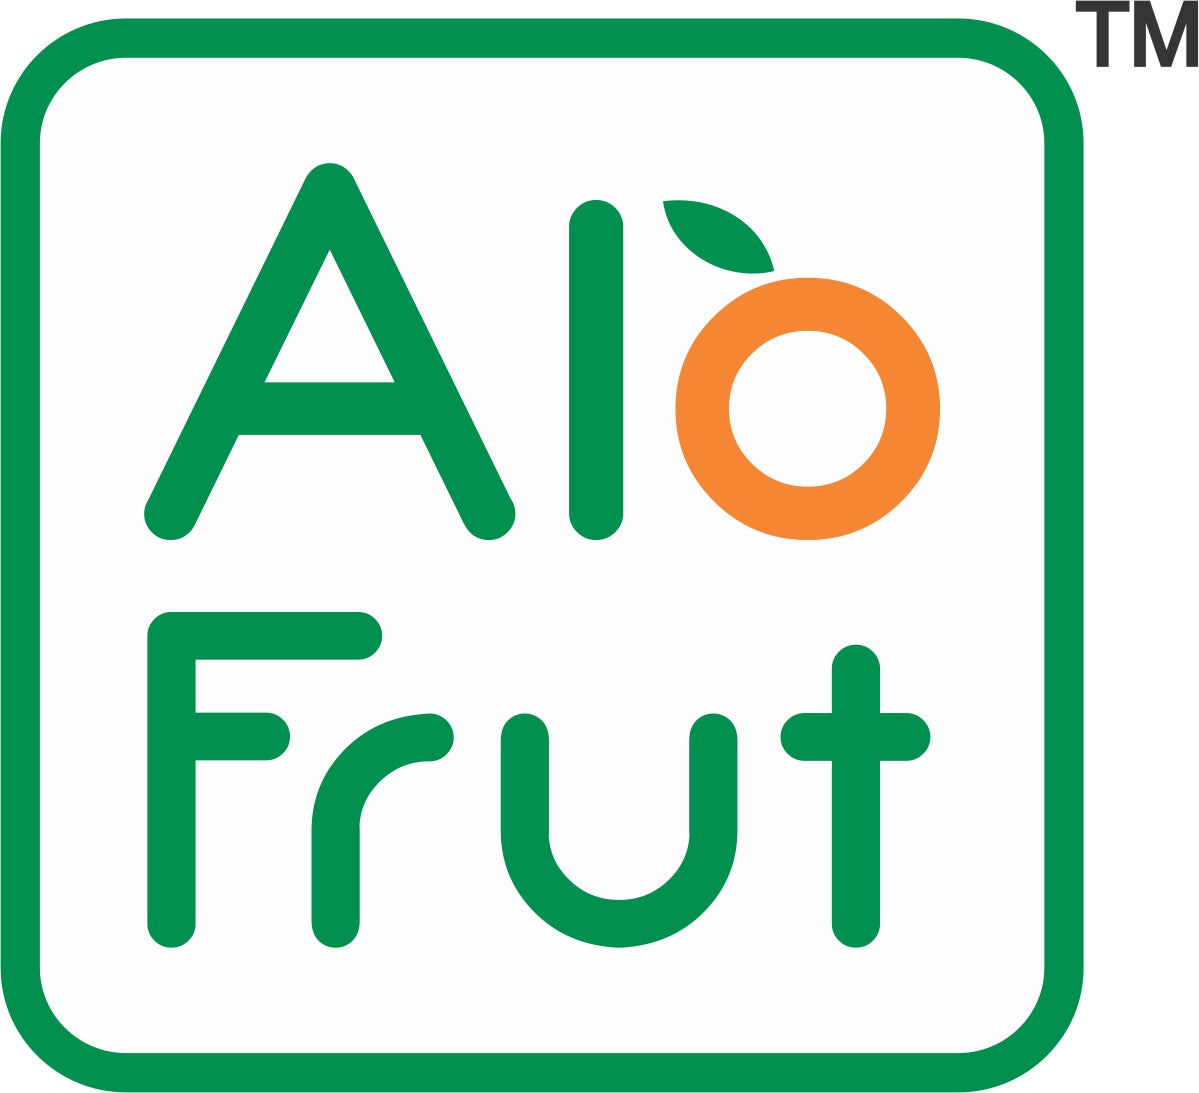 Alo Frut Kiwi Aloevera Chunks & Juice 150ml (Pack of 60)